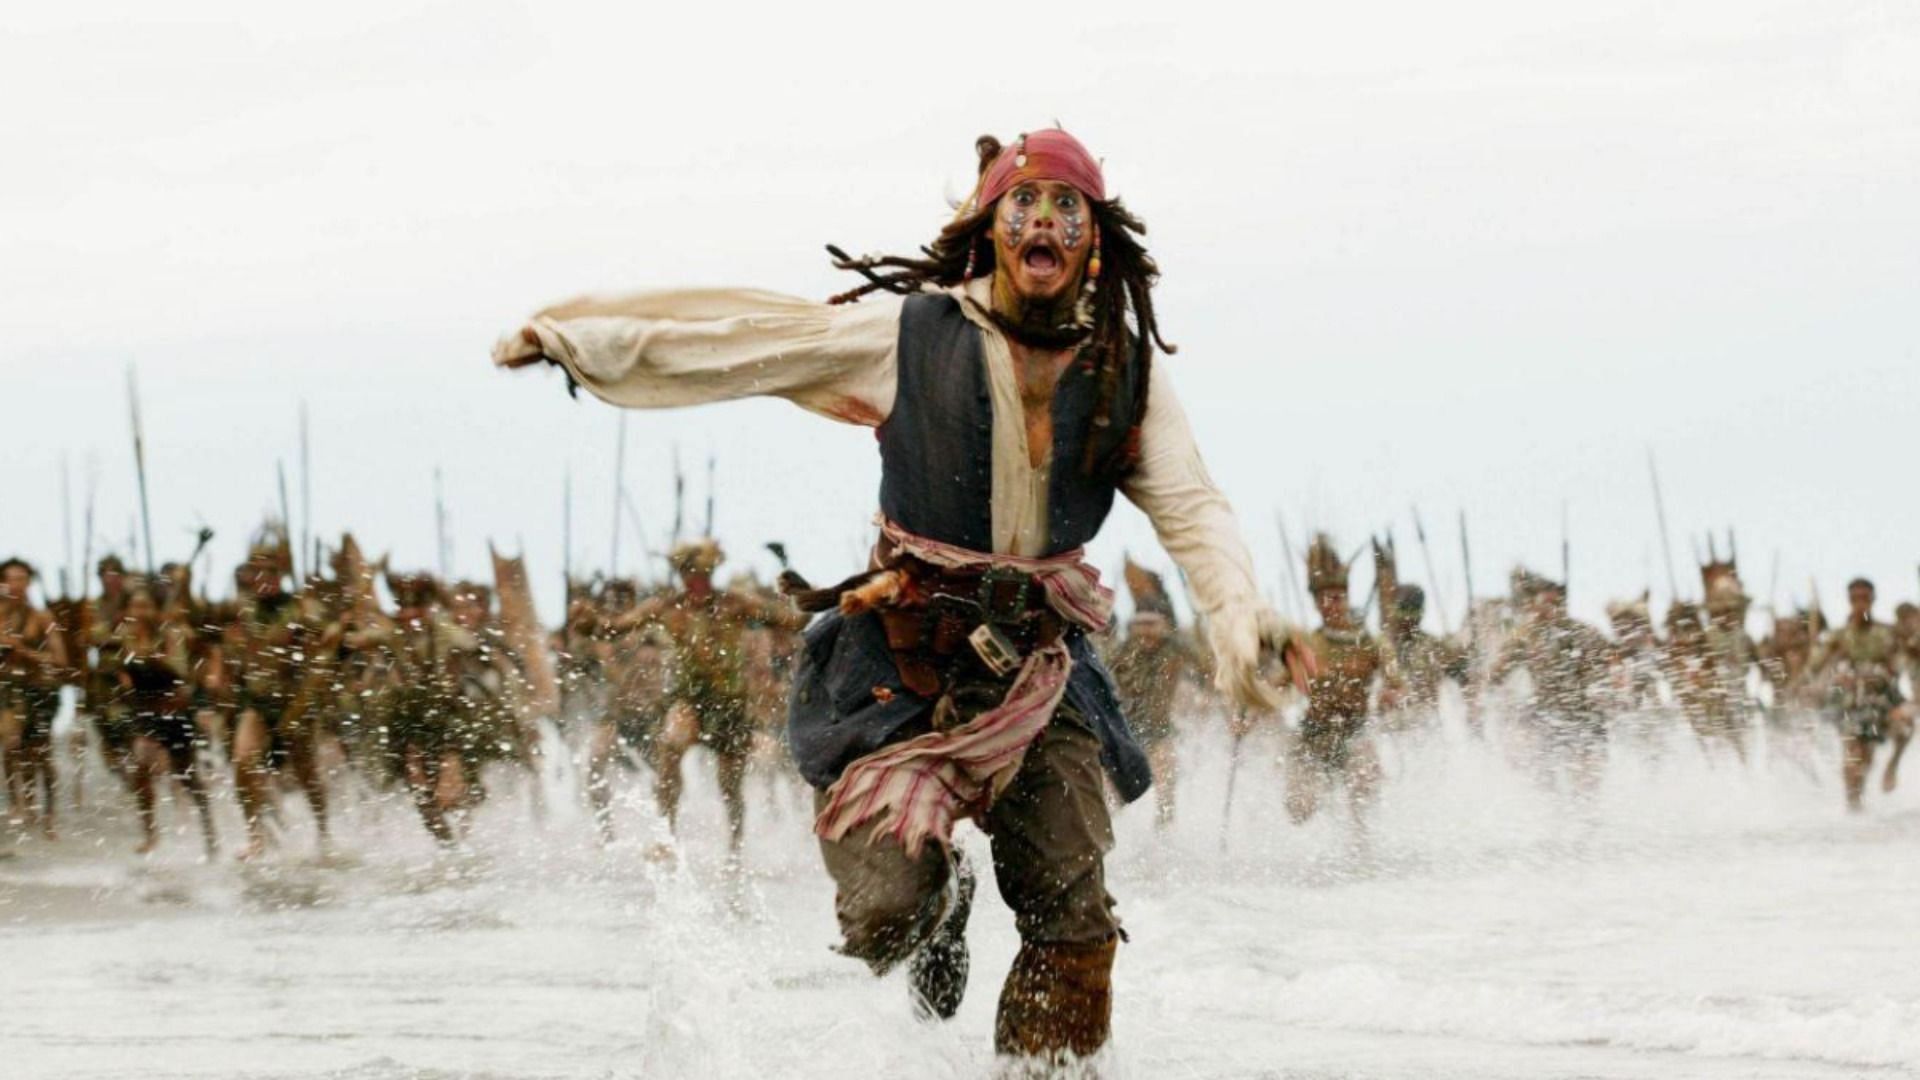 Jack Sparrow run challenge goes viral on TikTok (Image via Disney)